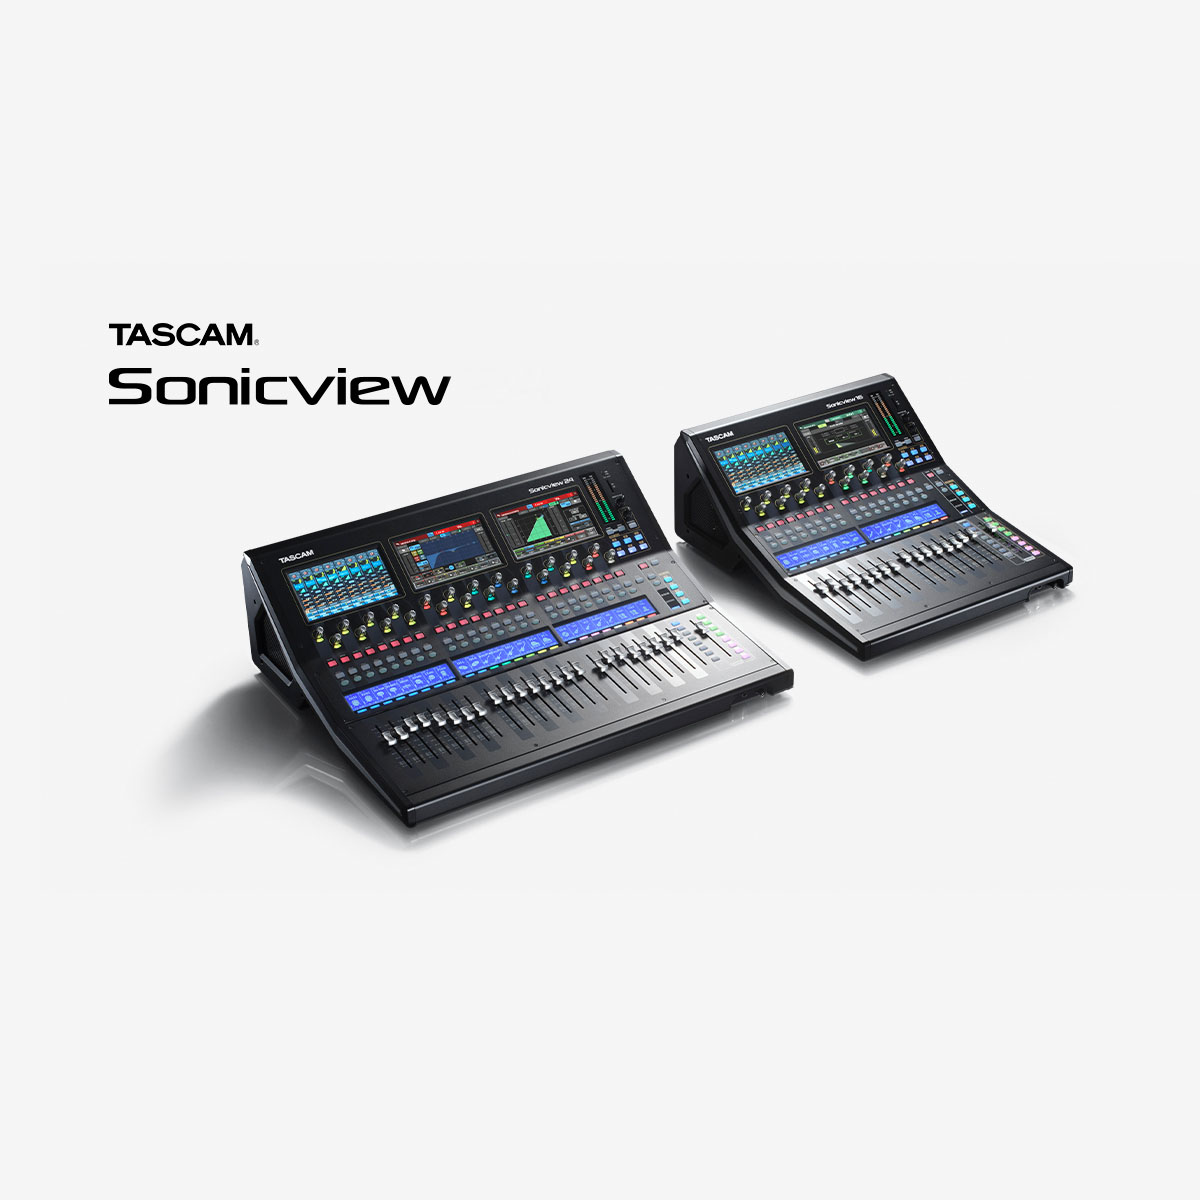 Serie TASCAM Sonicview XP - Lanzado nuevo firmware V1.5.3